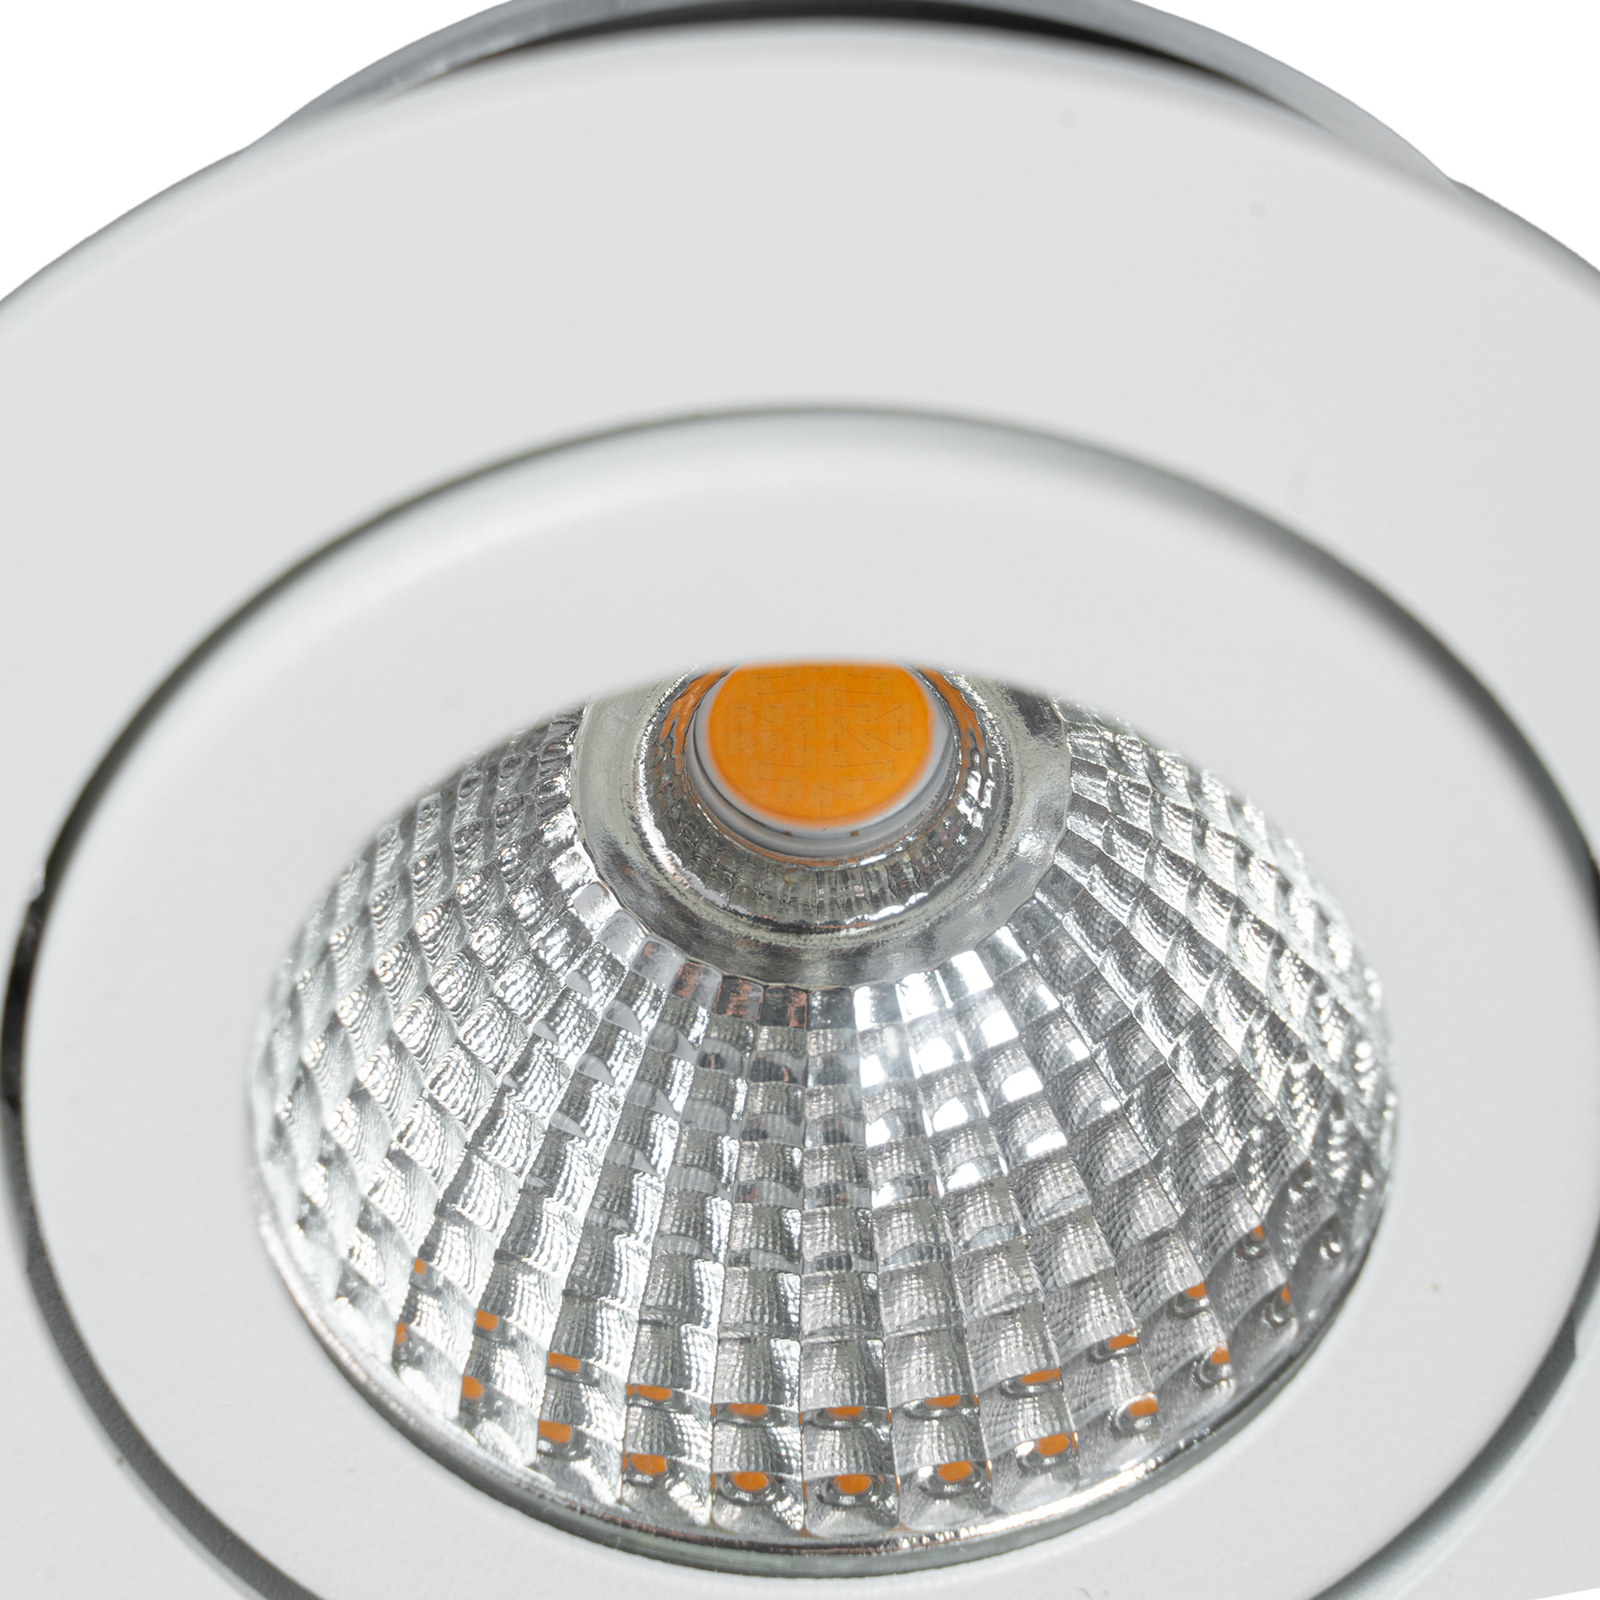 Arcchio LED stropné svietidlo Jyra, biele, 3 000 K